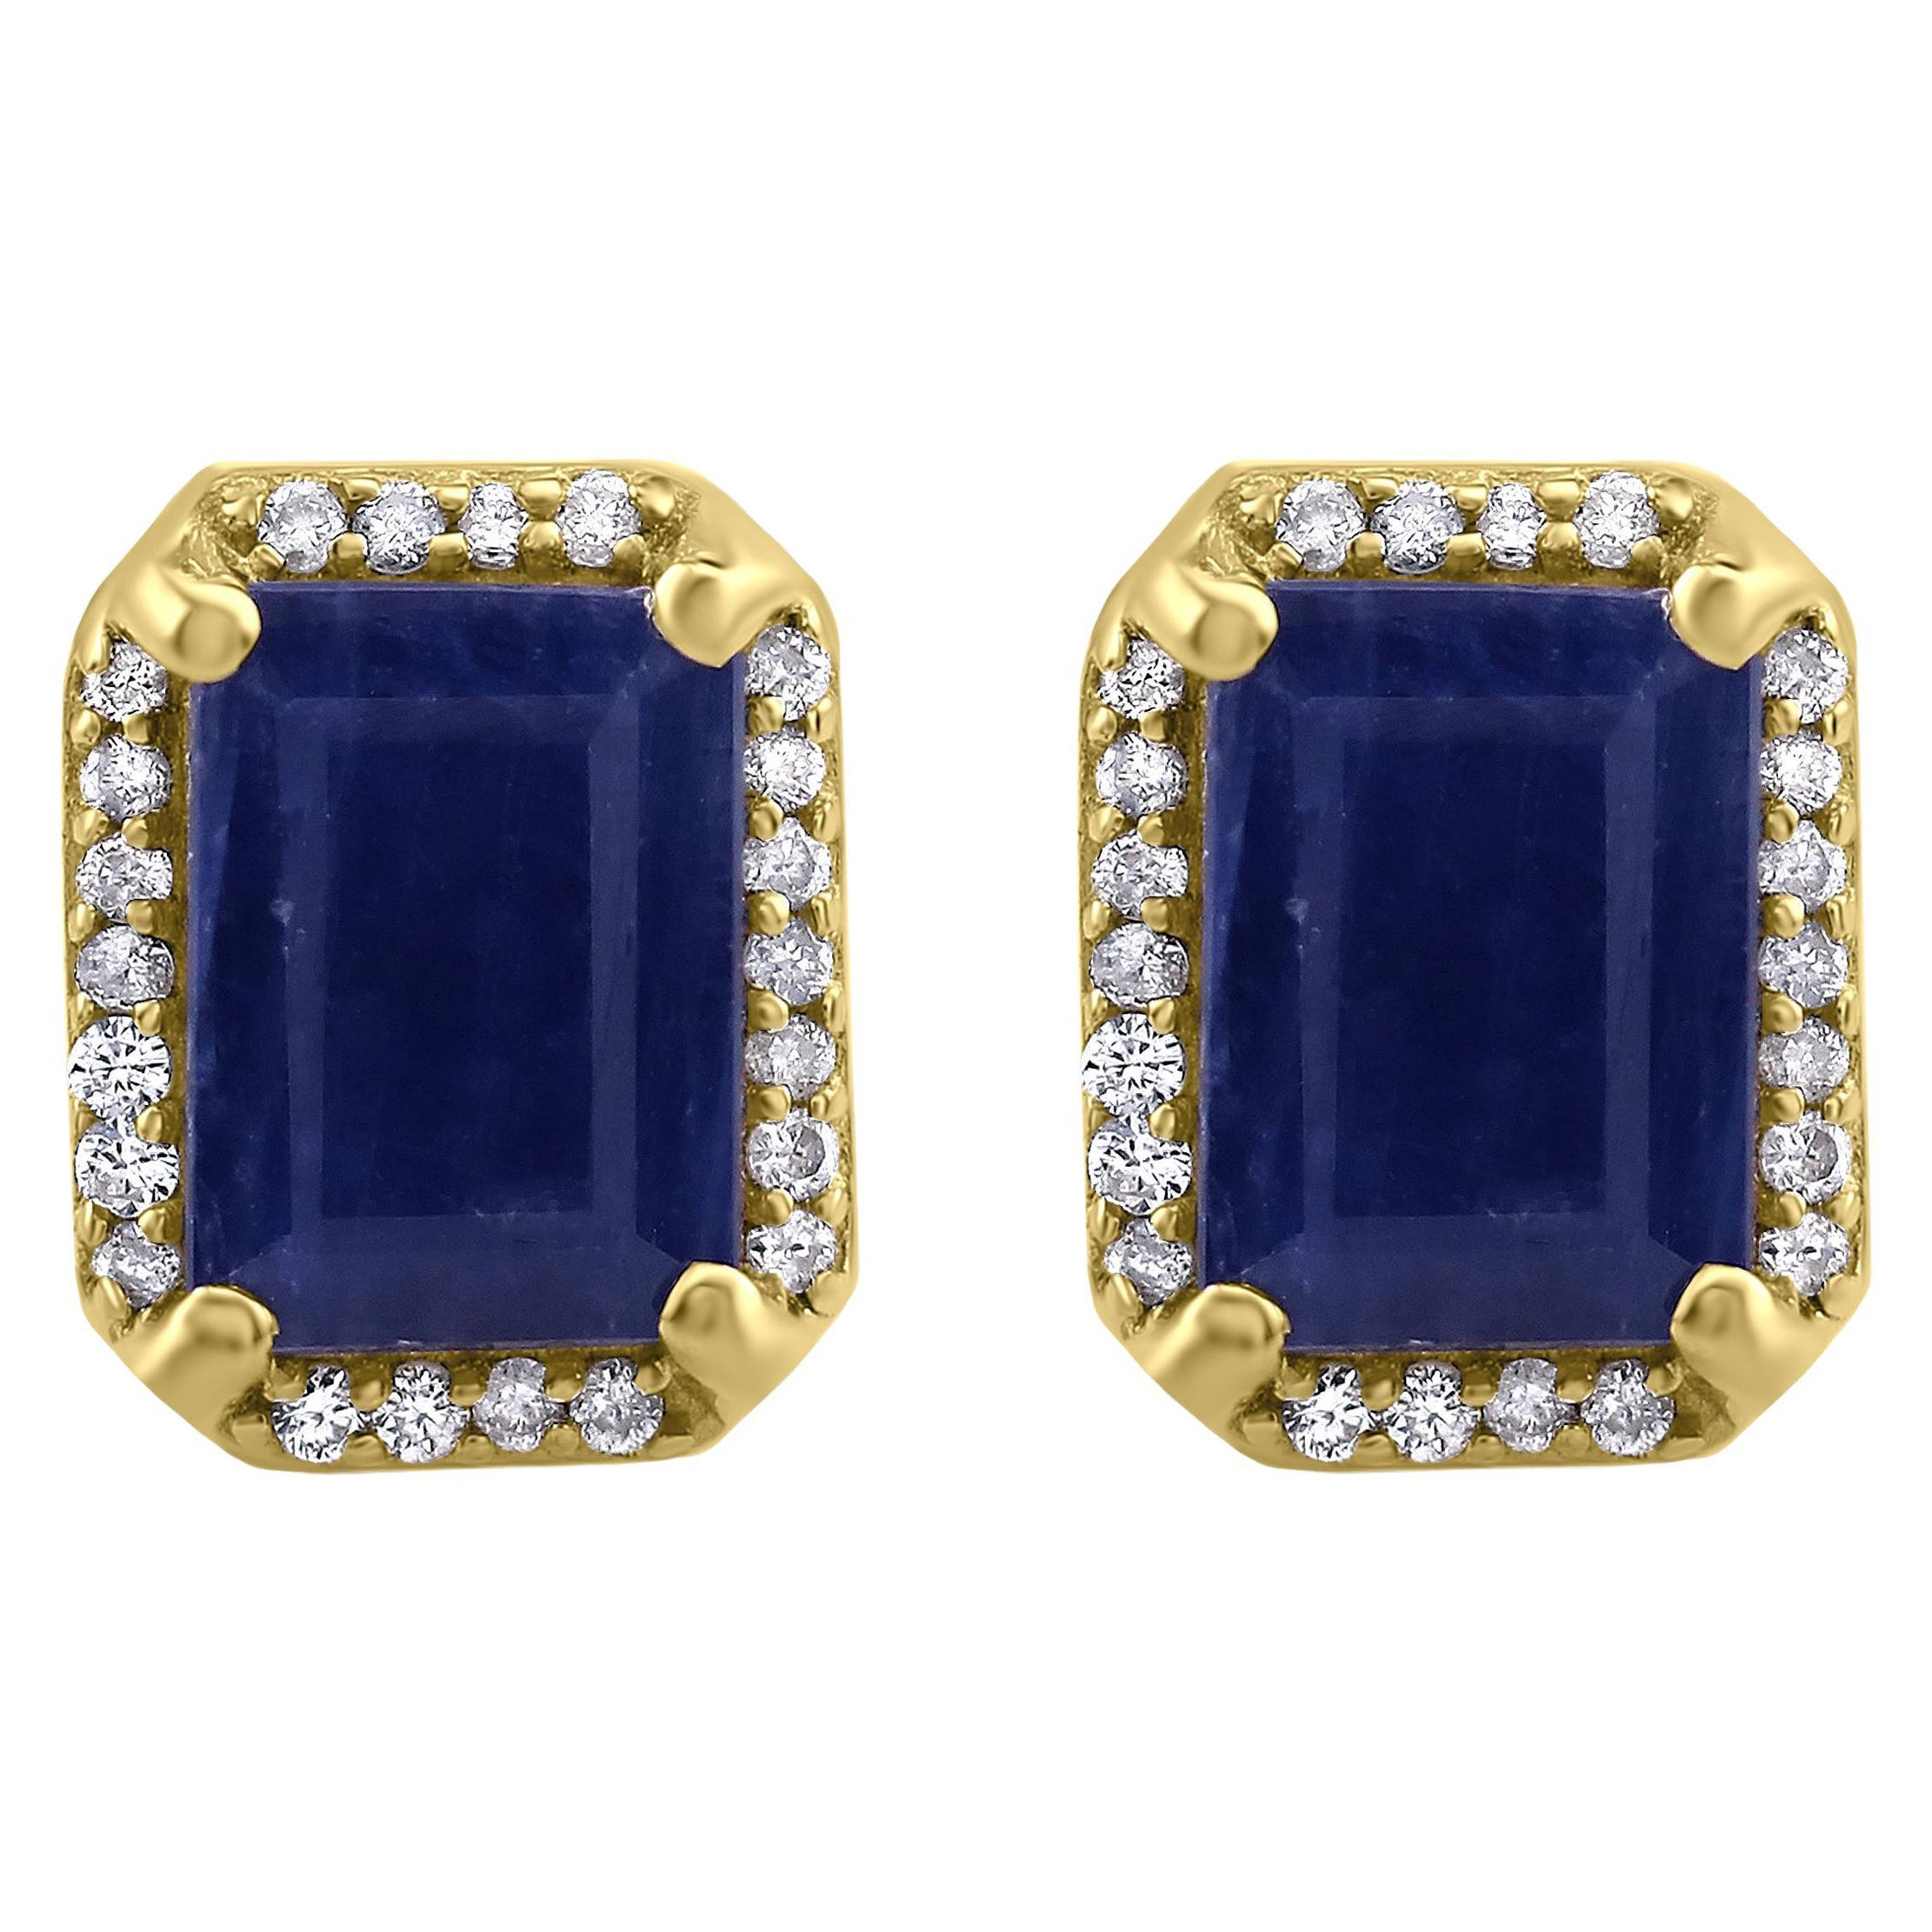 Gemistry 2.9 Carat Octagon Blue Sapphire Stud Earrings with Diamond in 14K Gold